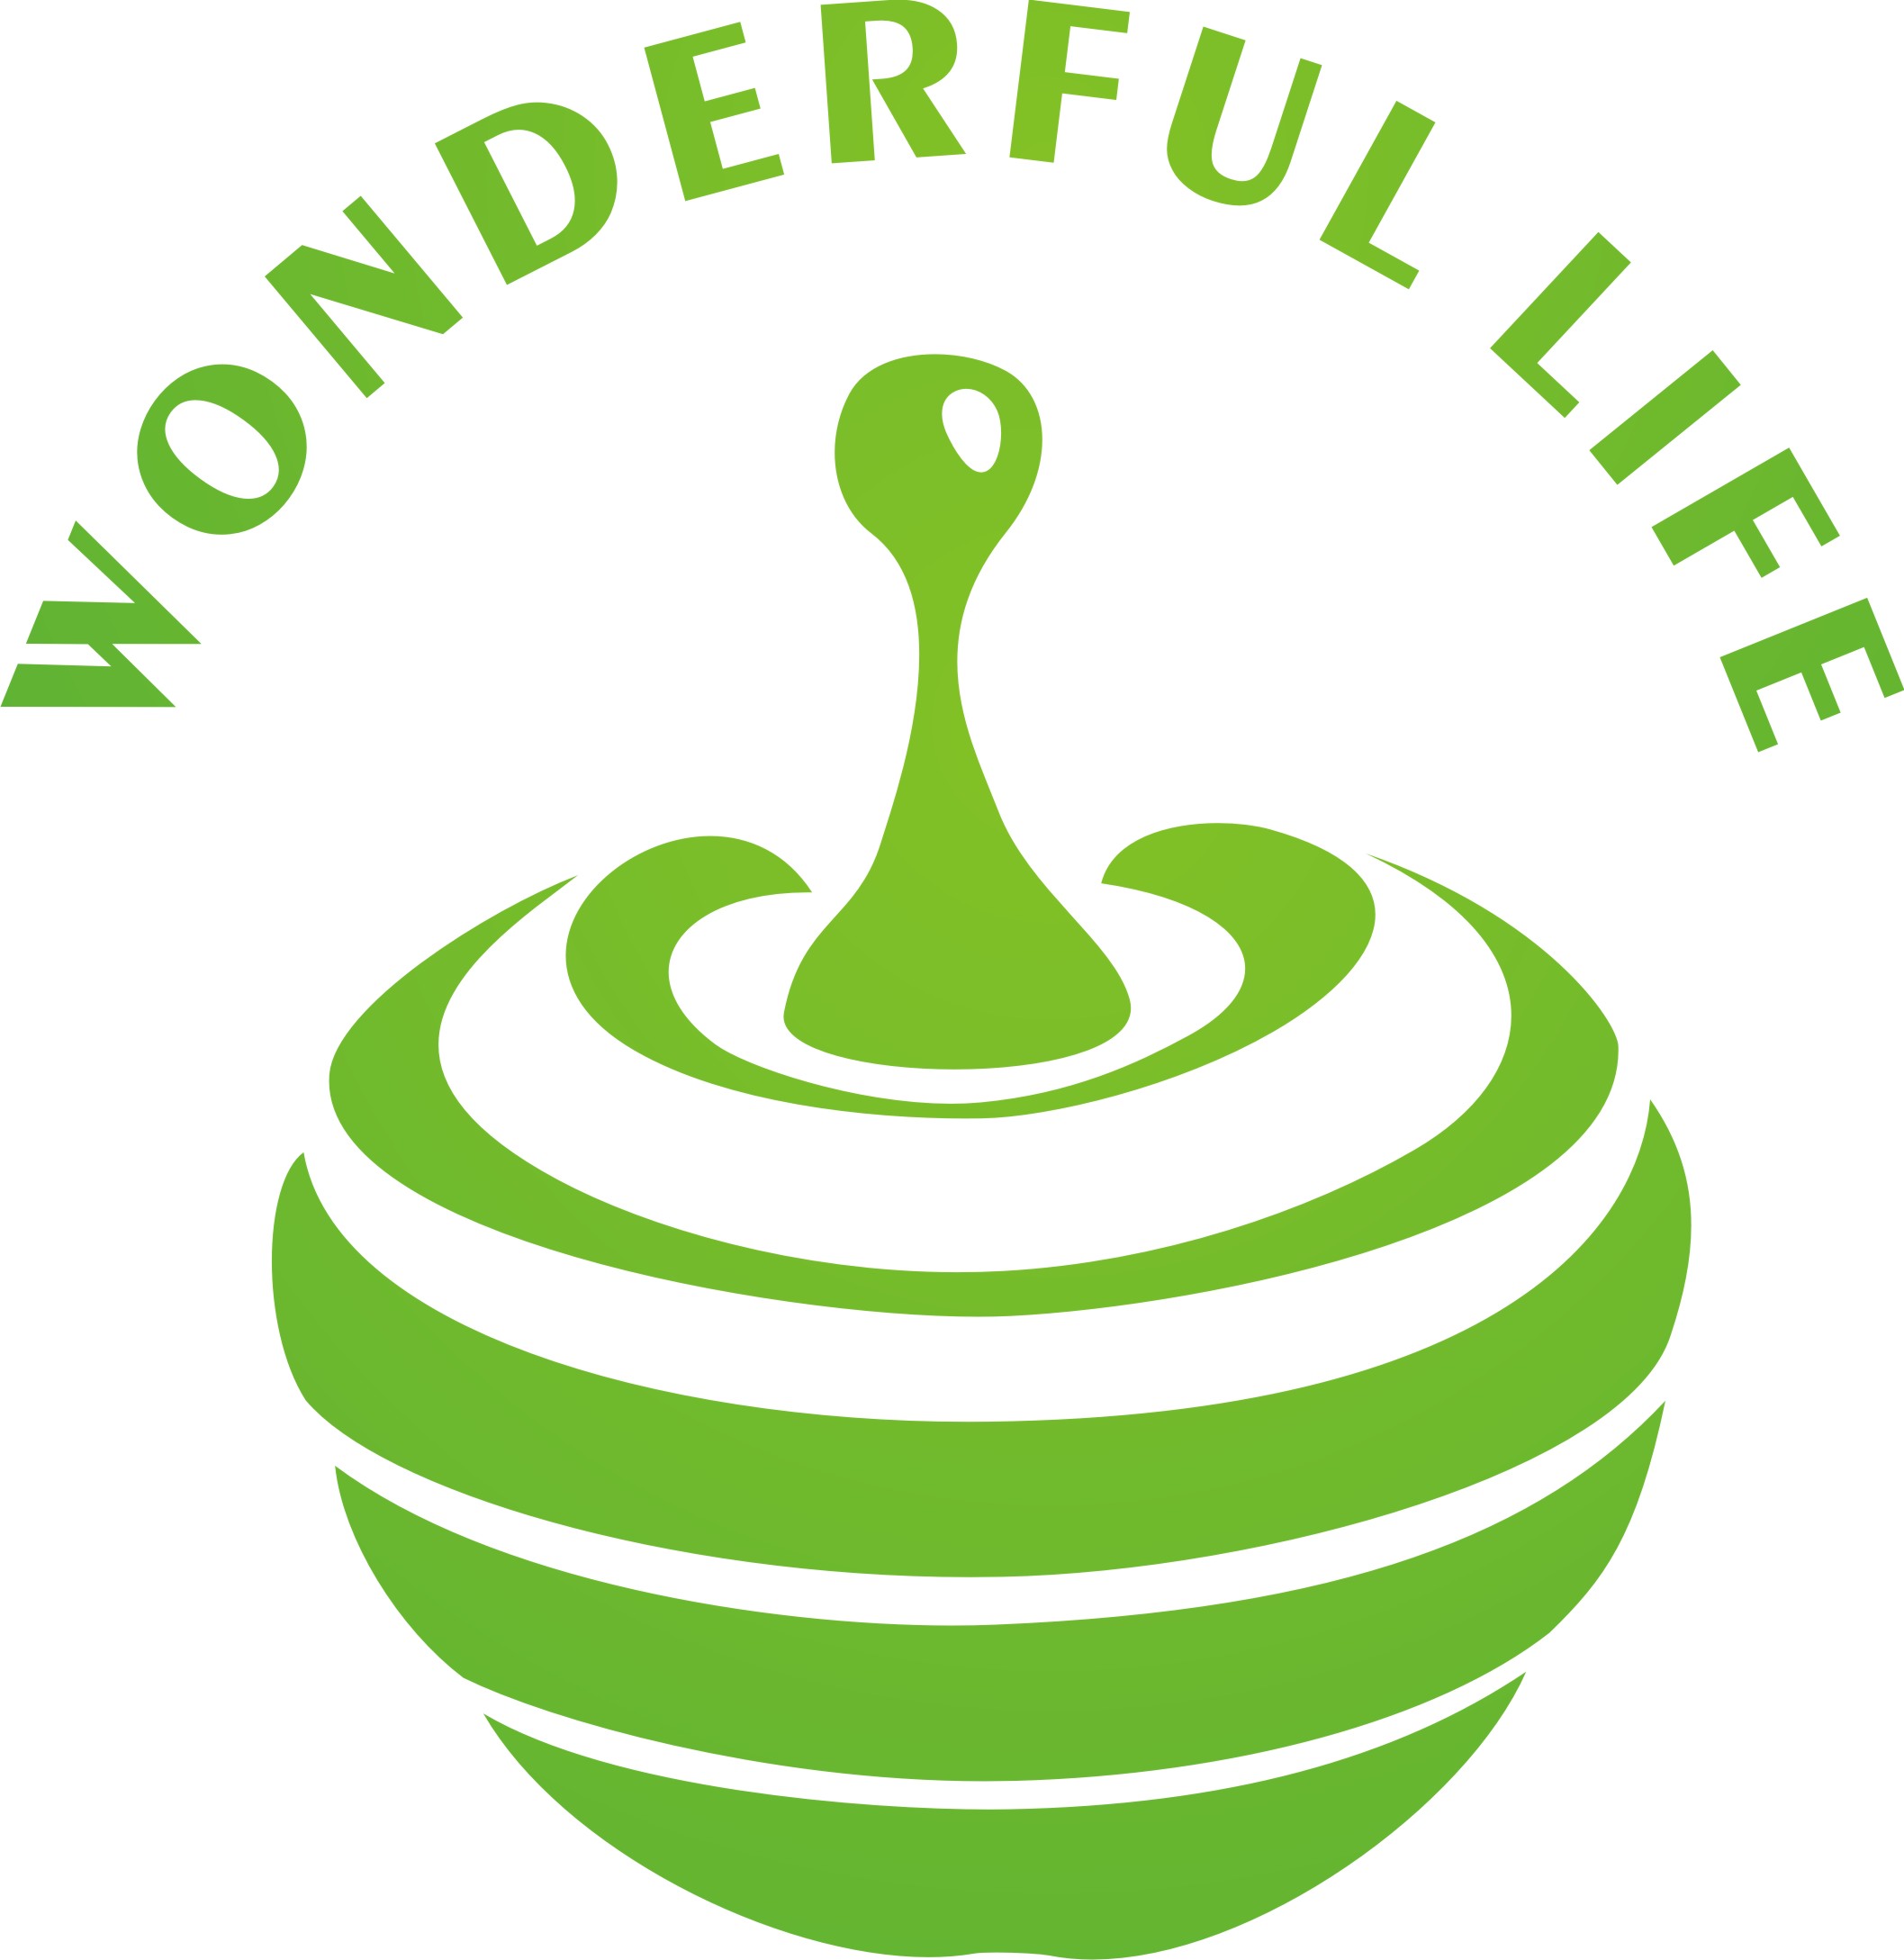 TAIWAN - Wonderful Life Science Co Ltd.